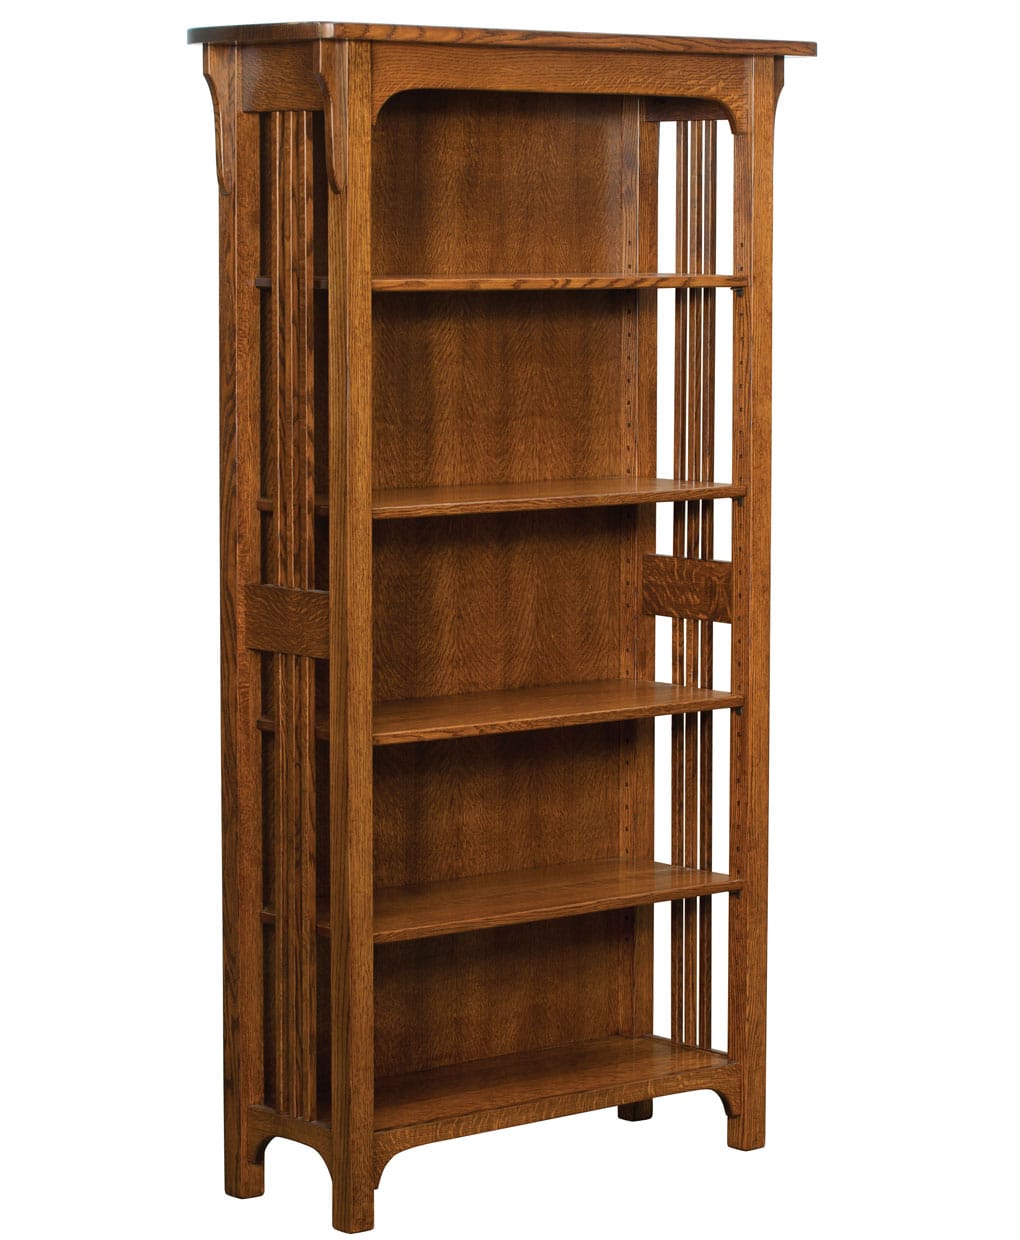 Craftsman Mission Bookcase Amish, Amish Furniture Bookcase